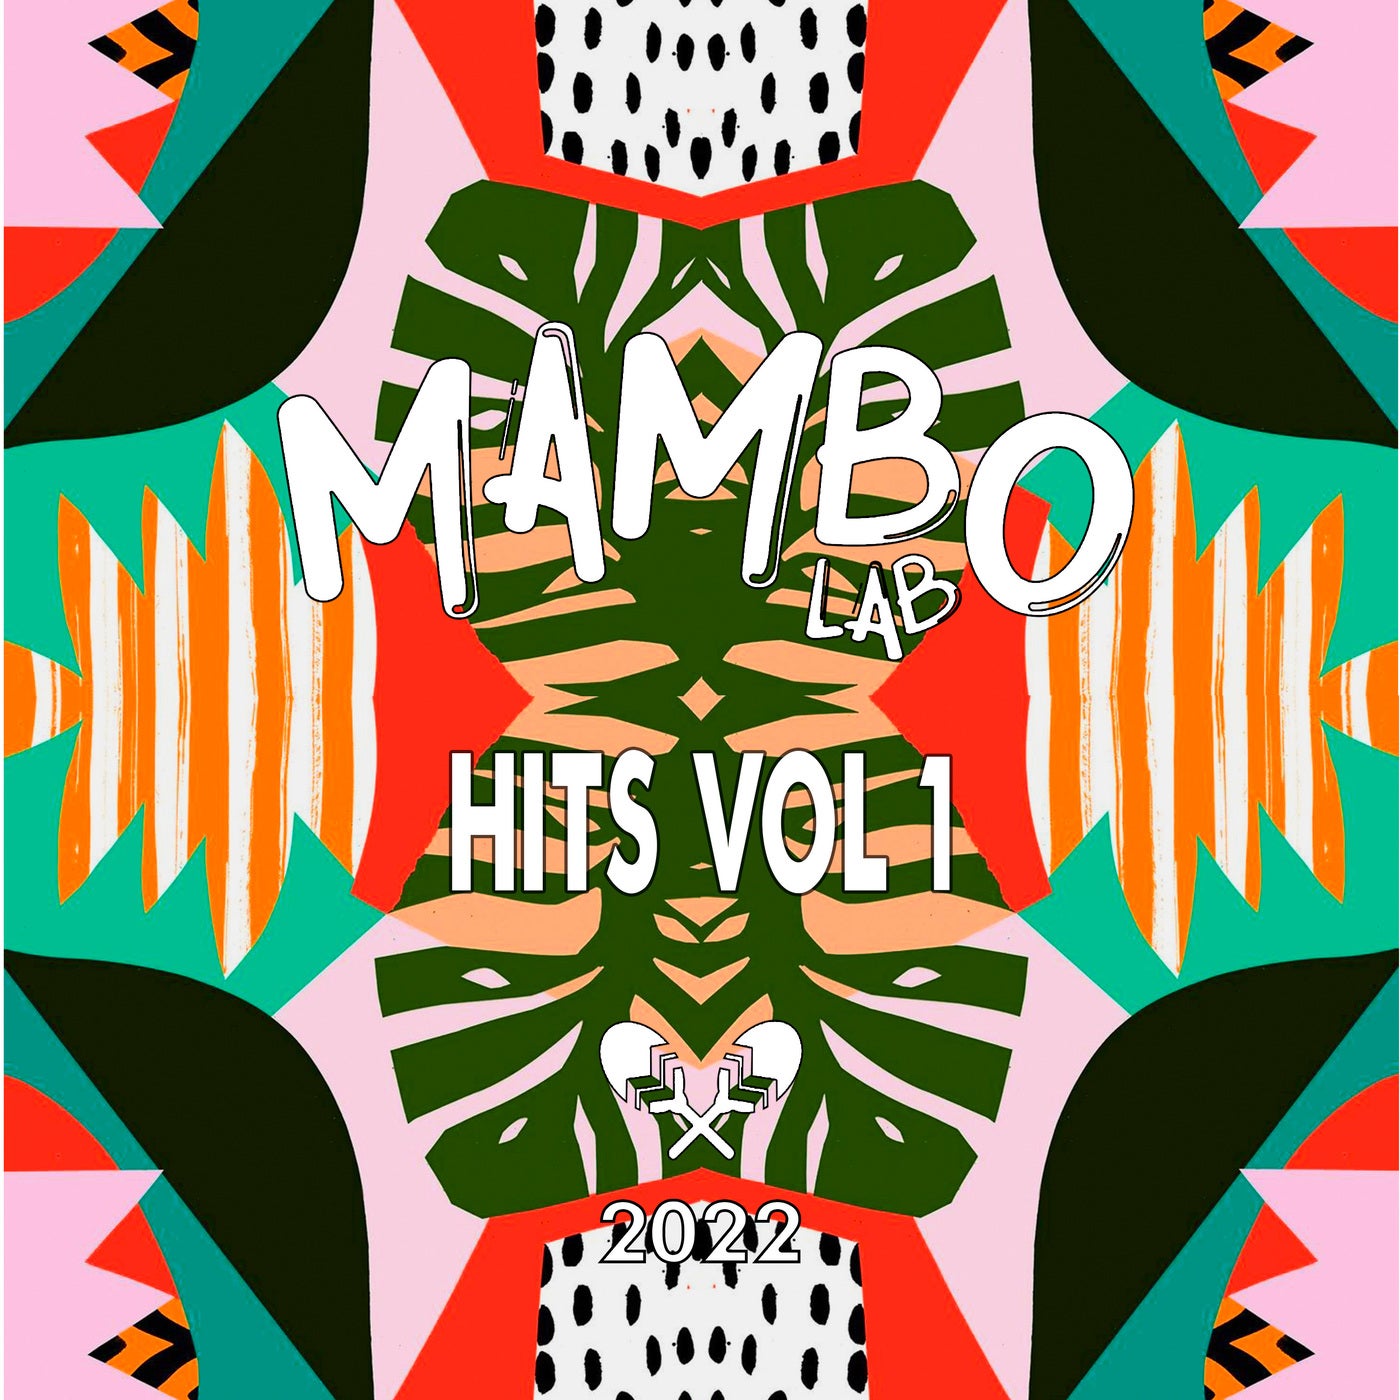 Mambo Hits, Vol. 1